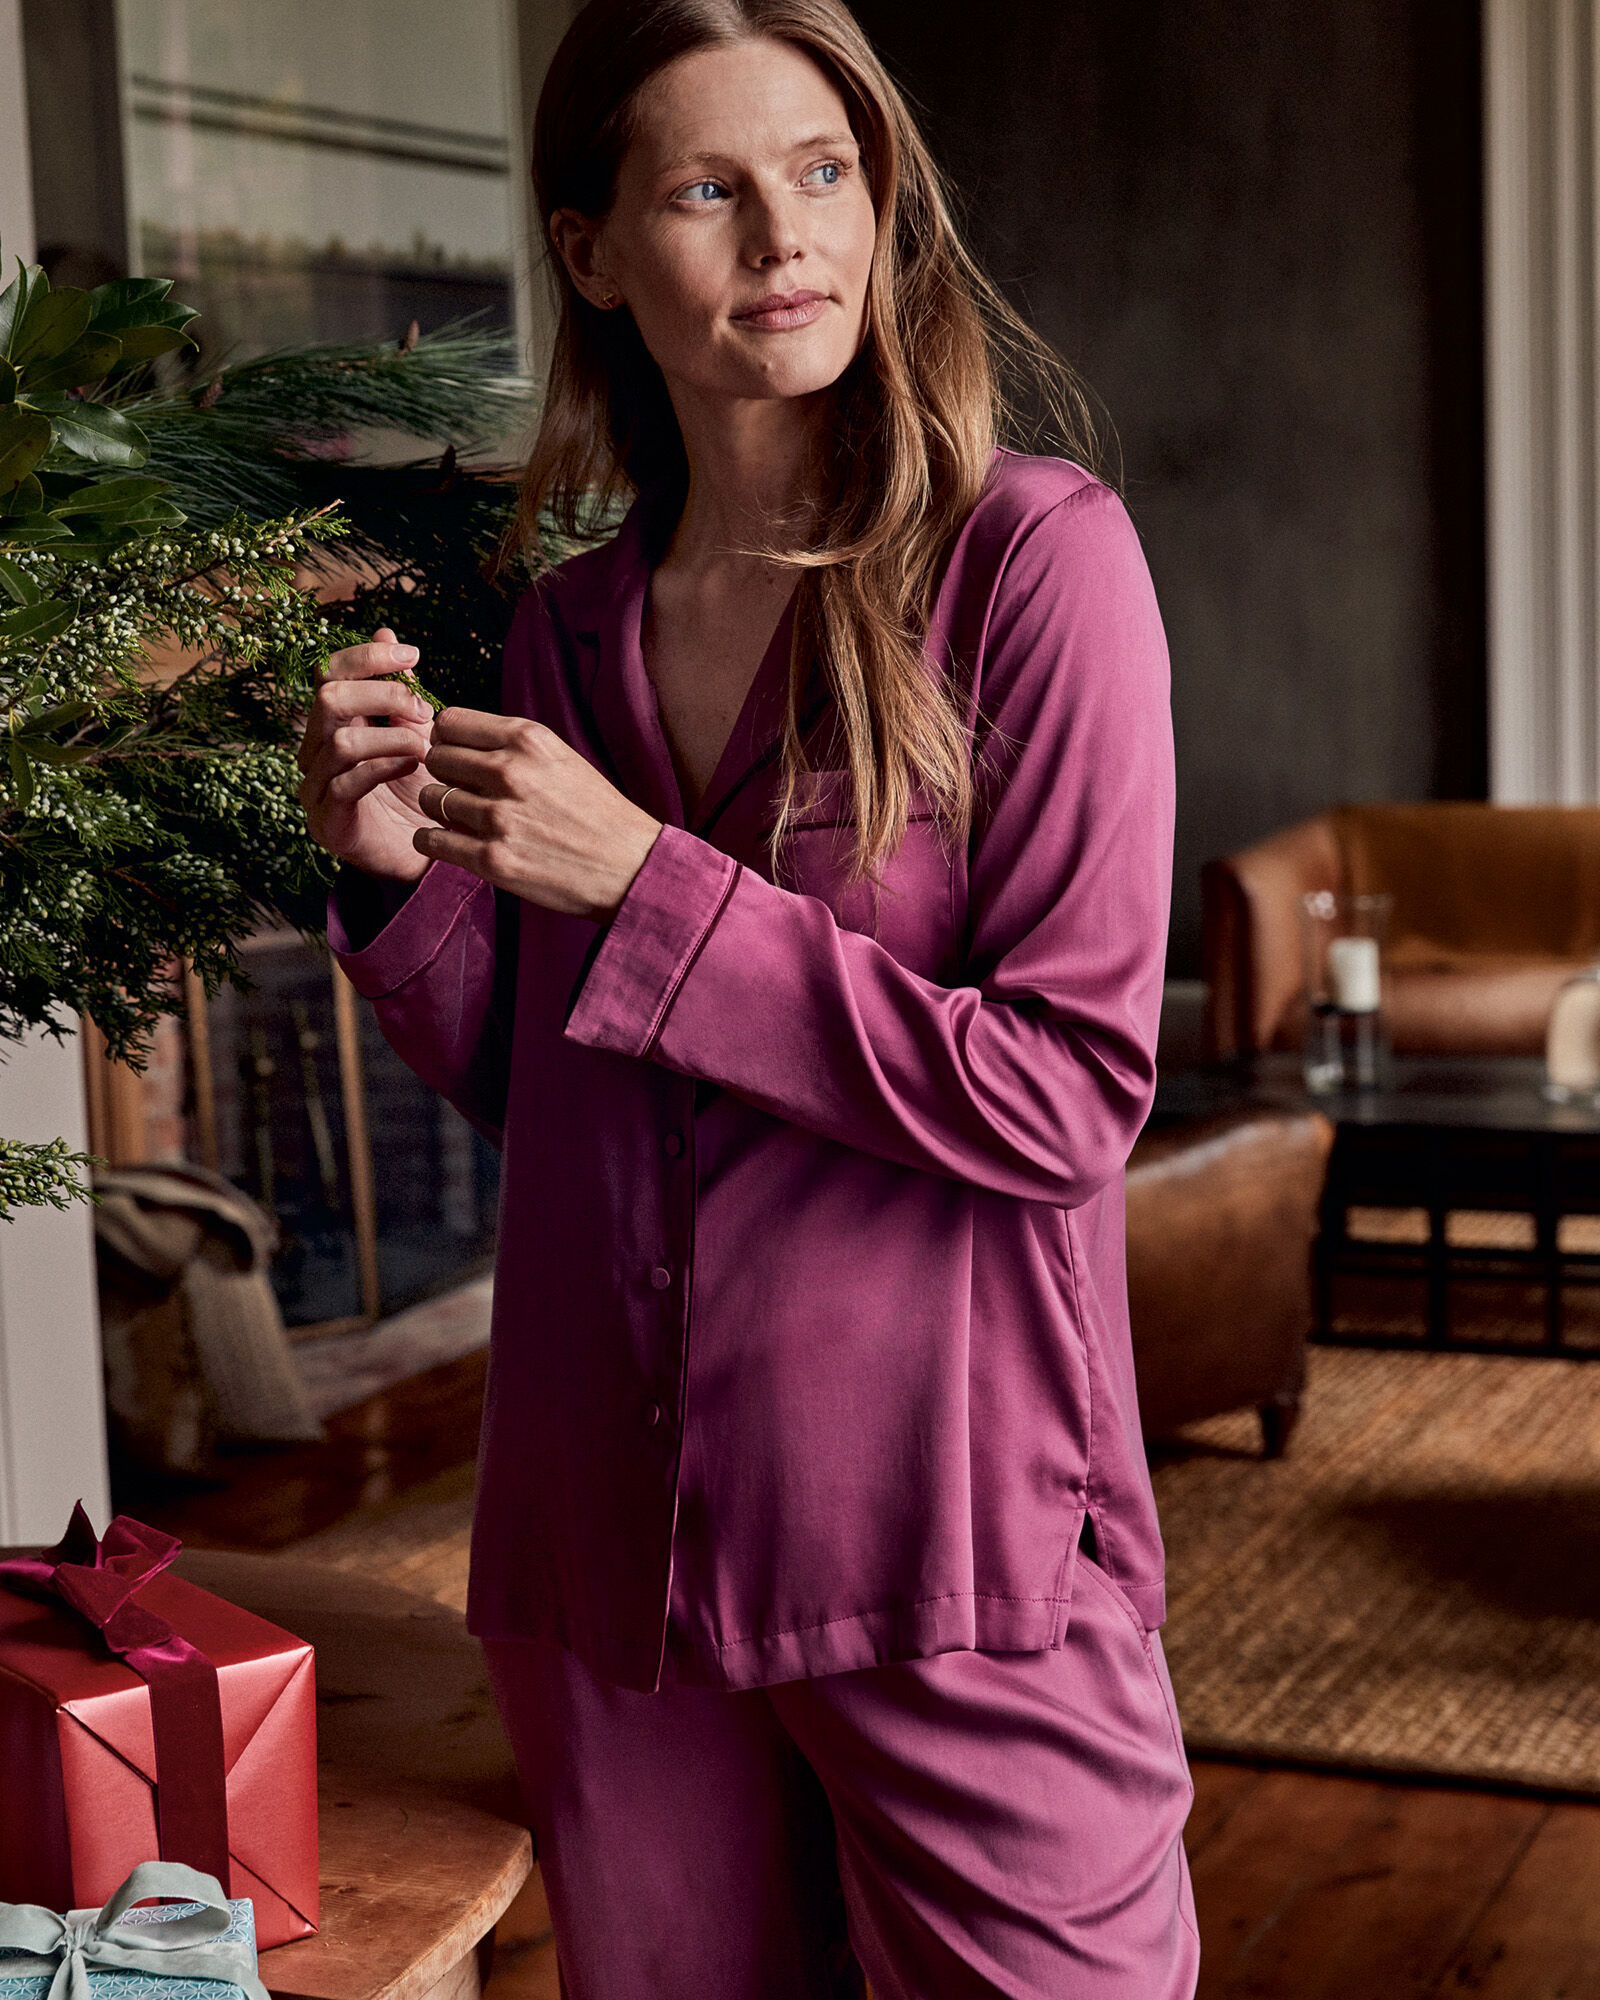 Washable Silk Pajamas Set – 100% Silk Shirt and Shorts | Ravella Luxury, Midnight Navy / L/12-14